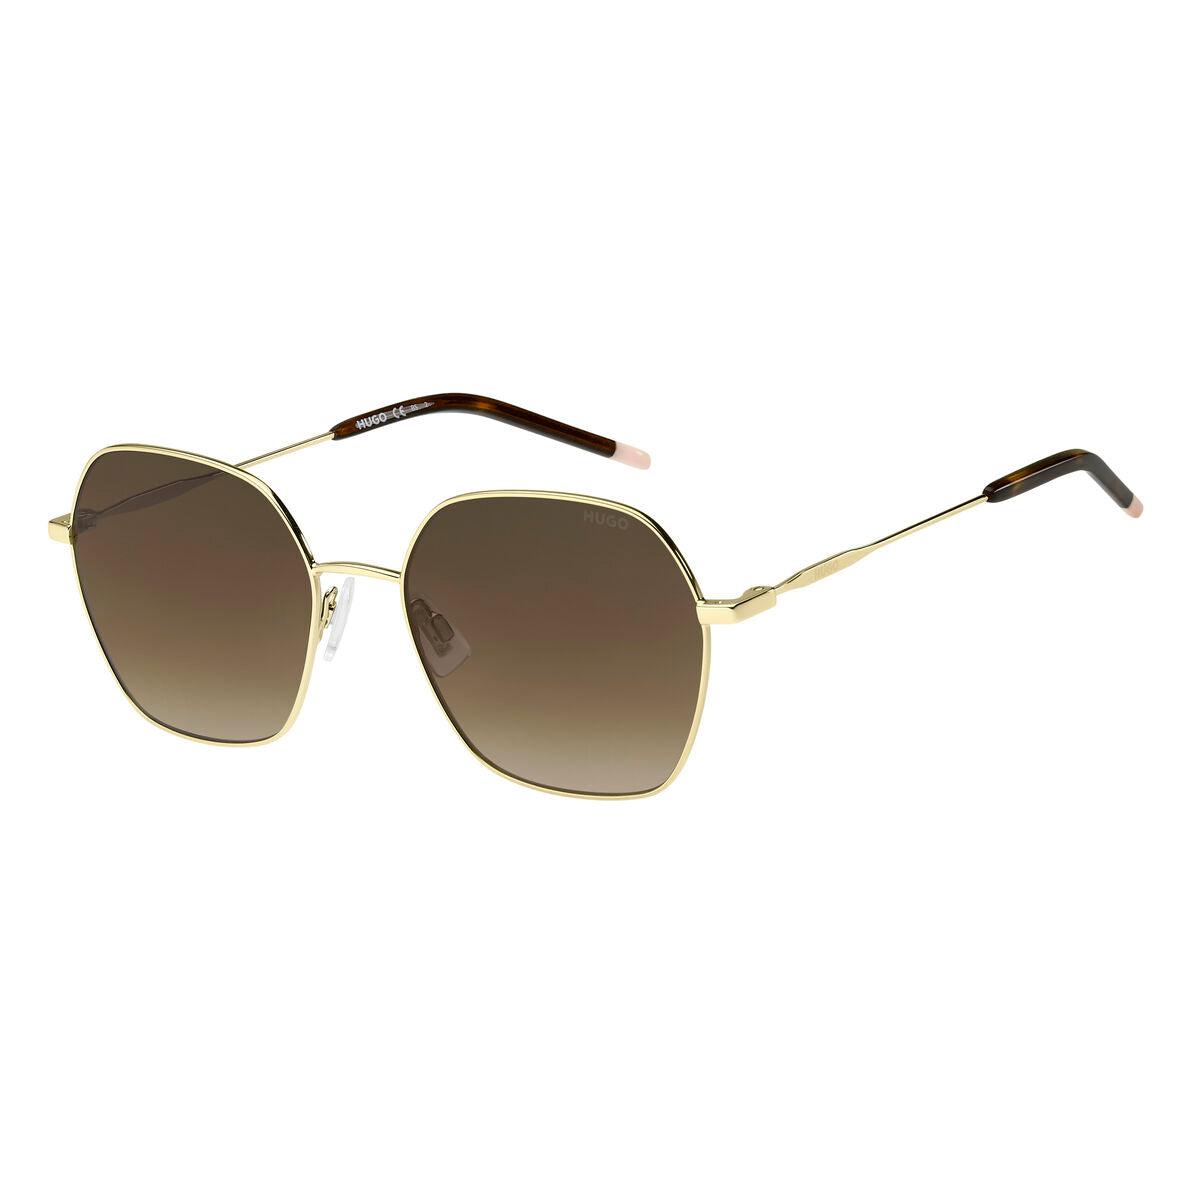 BOSS by HUGO BOSS Ladies' Sunglasses Hg-1183-s-j5g-ha in Metallic | Lyst